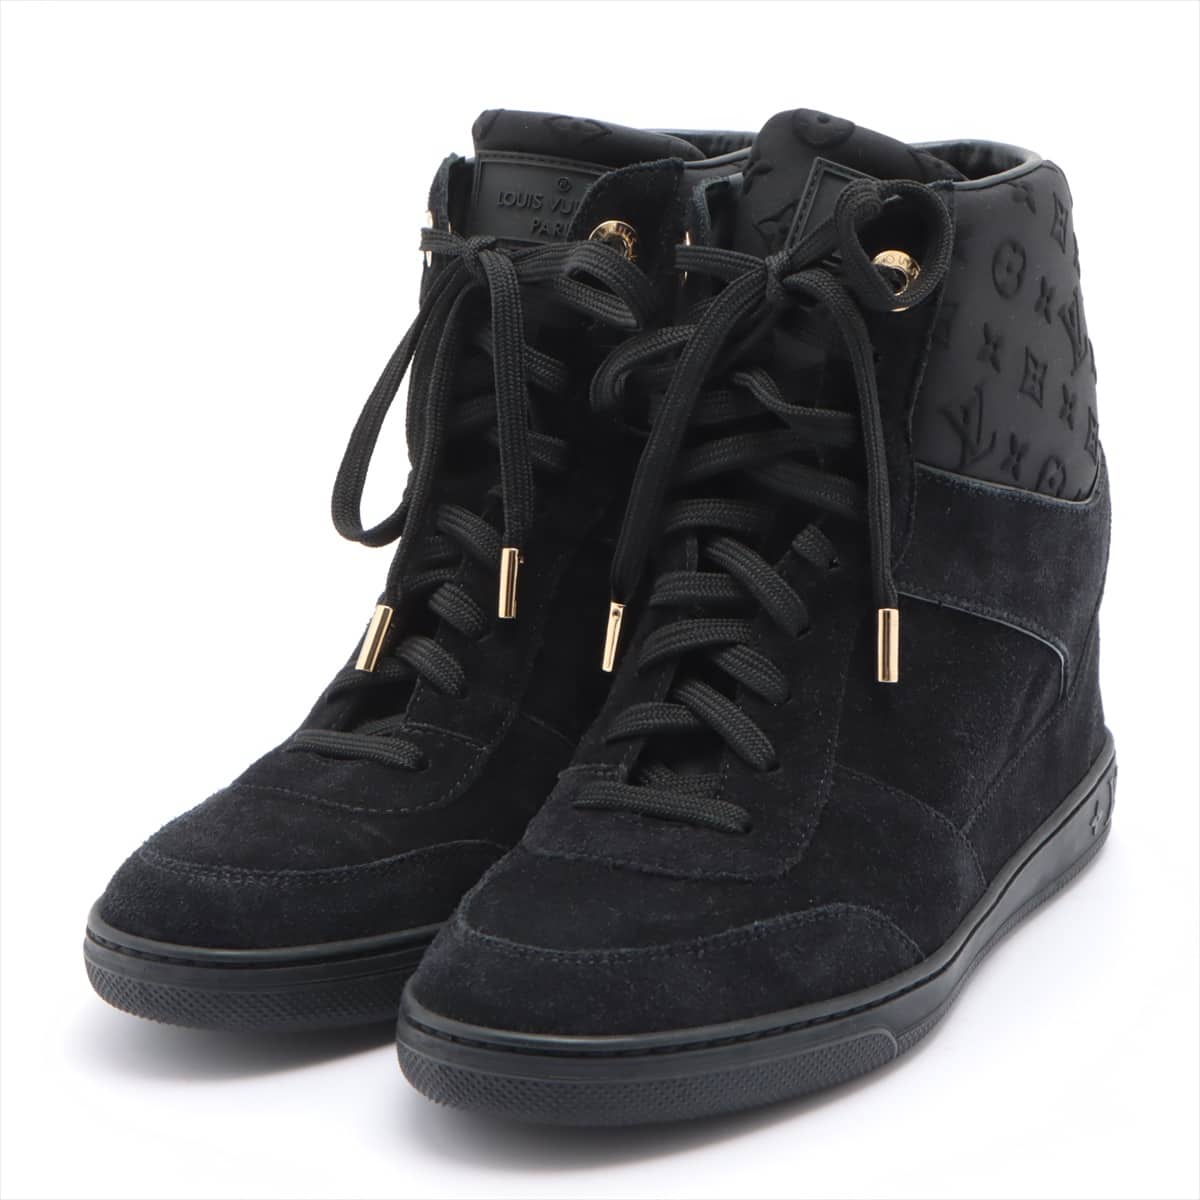 Louis Vuitton Cliff Topline 16 years Leather High-top Sneakers 37 Ladies' Black CL0166 Monogram